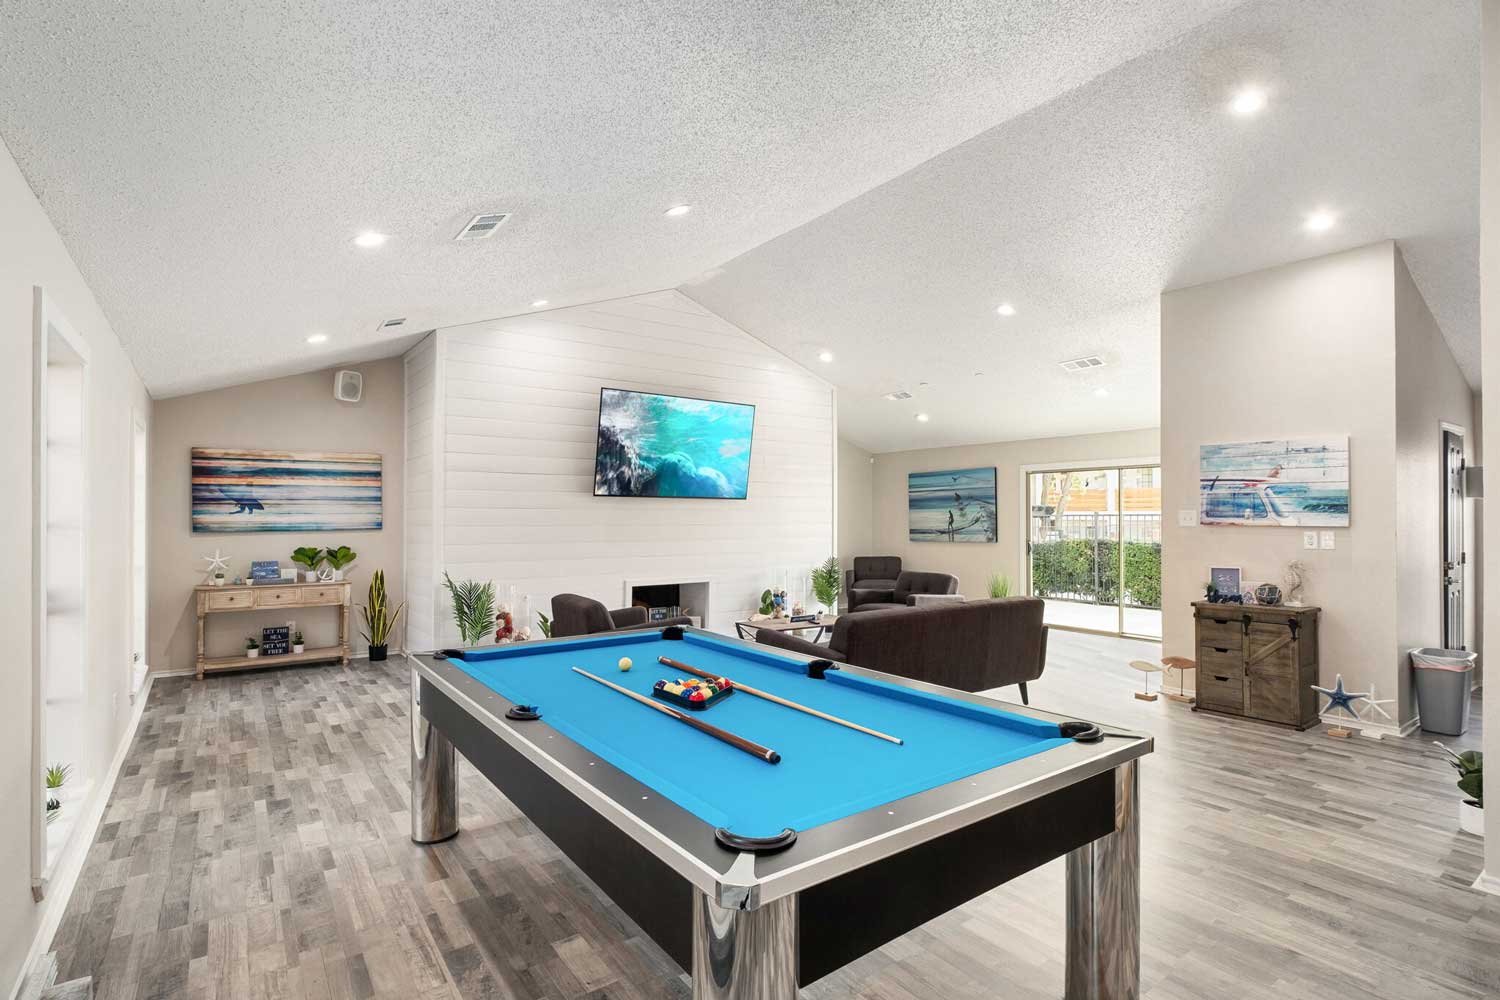 Billiard Pool Table & Lounge Area with Widescreen TV